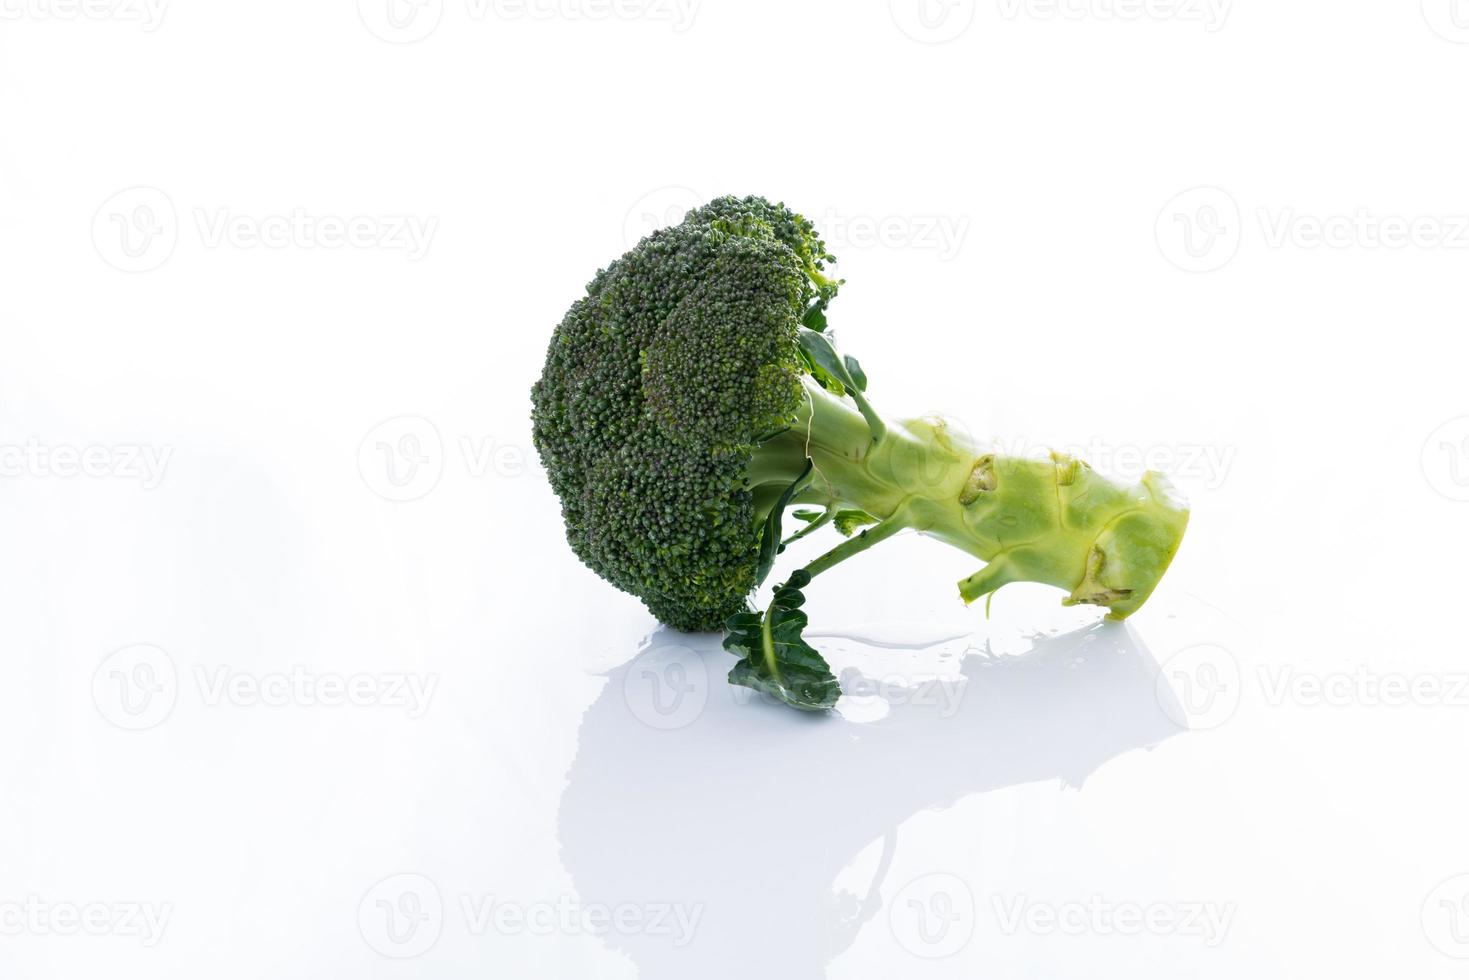 Close up broccoli su bianco foto